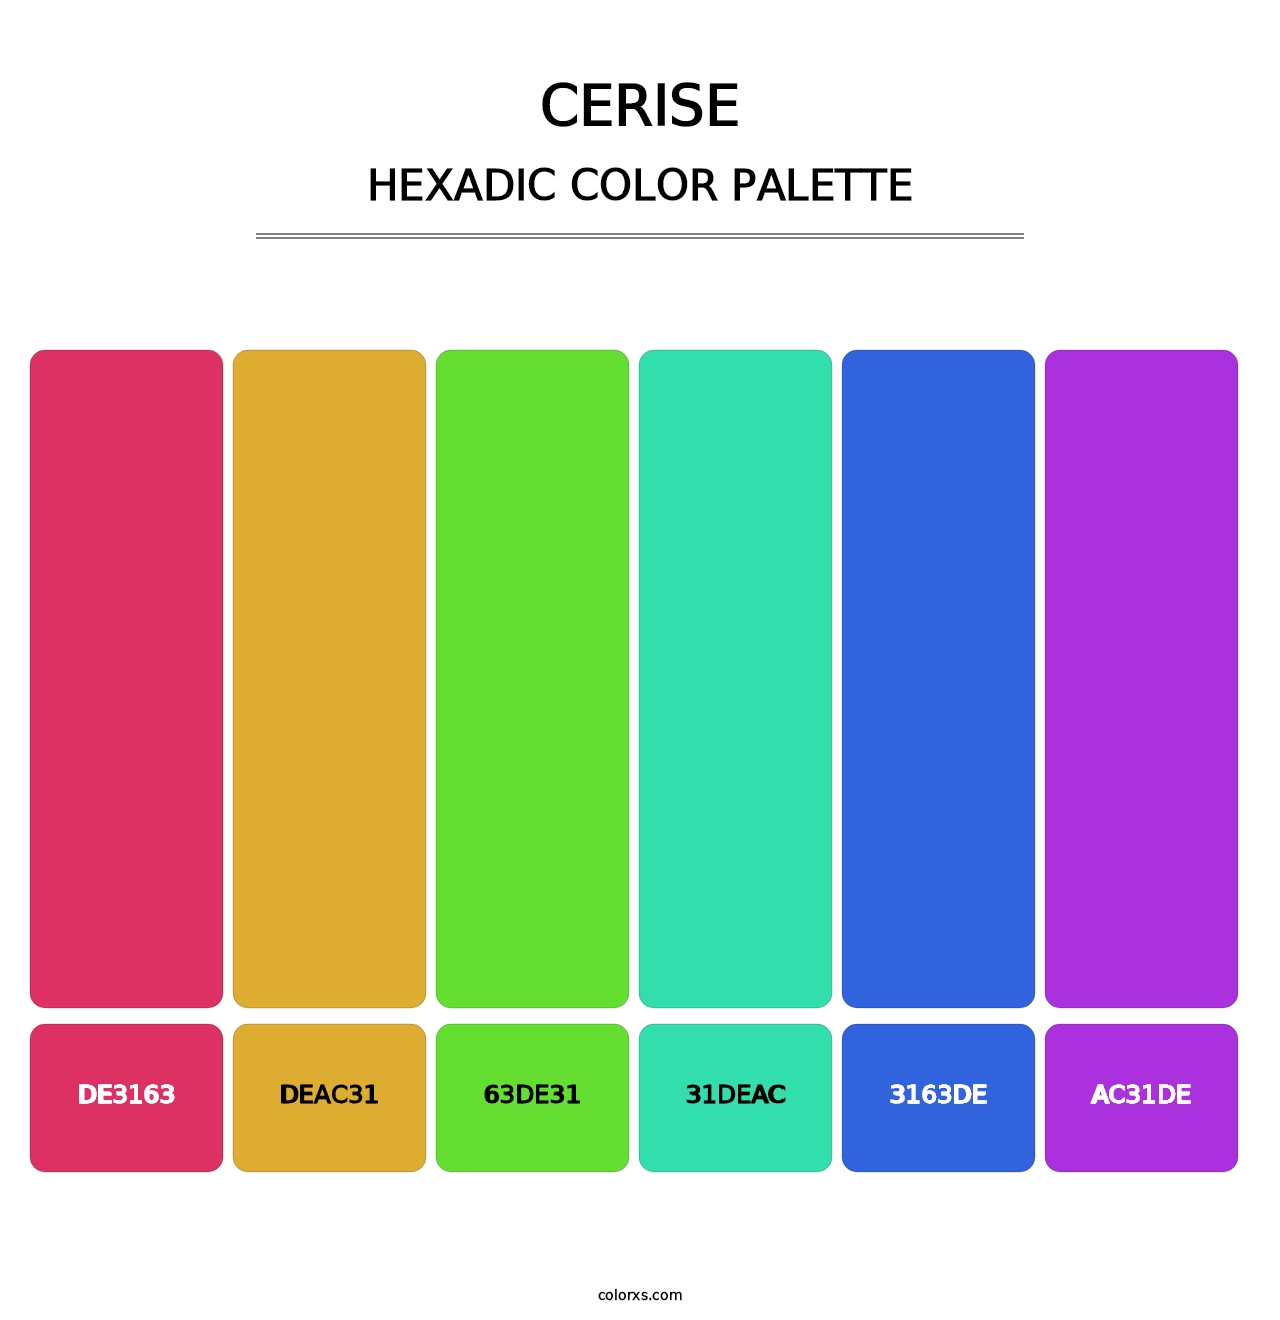 Cerise - Hexadic Color Palette